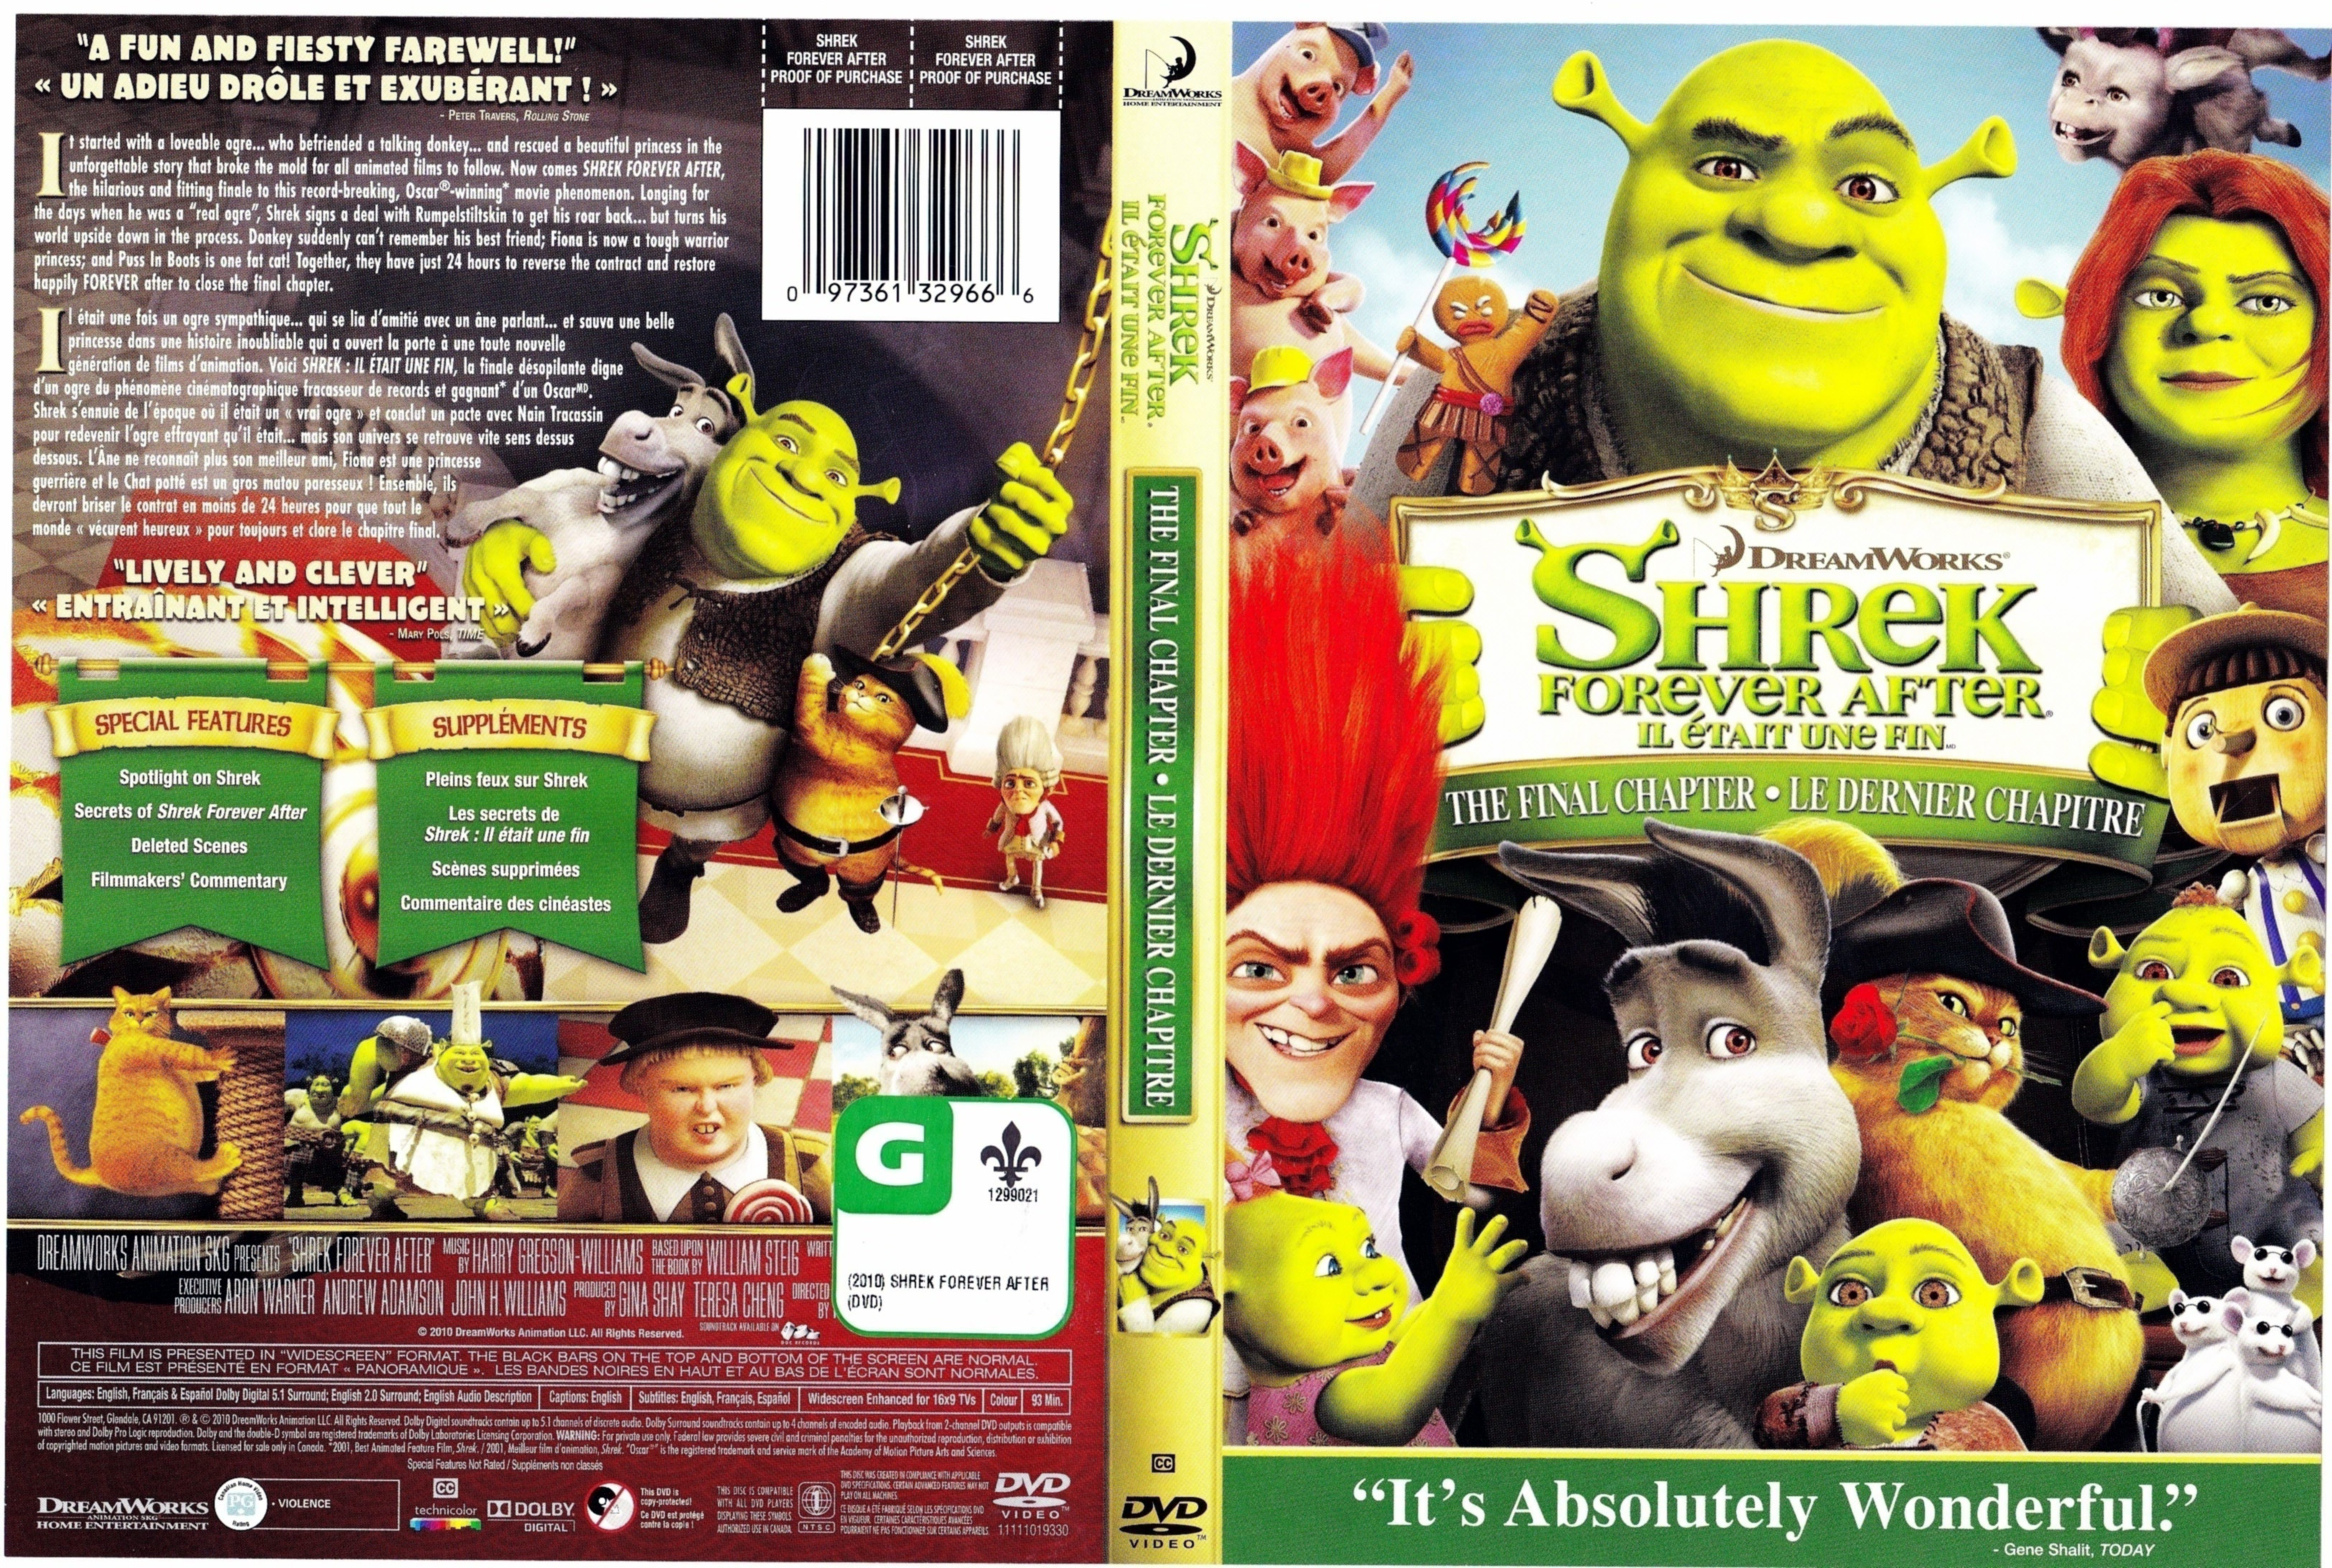 Jaquette DVD Shrek il tait une fin - Shrek forever after (Canadienne)